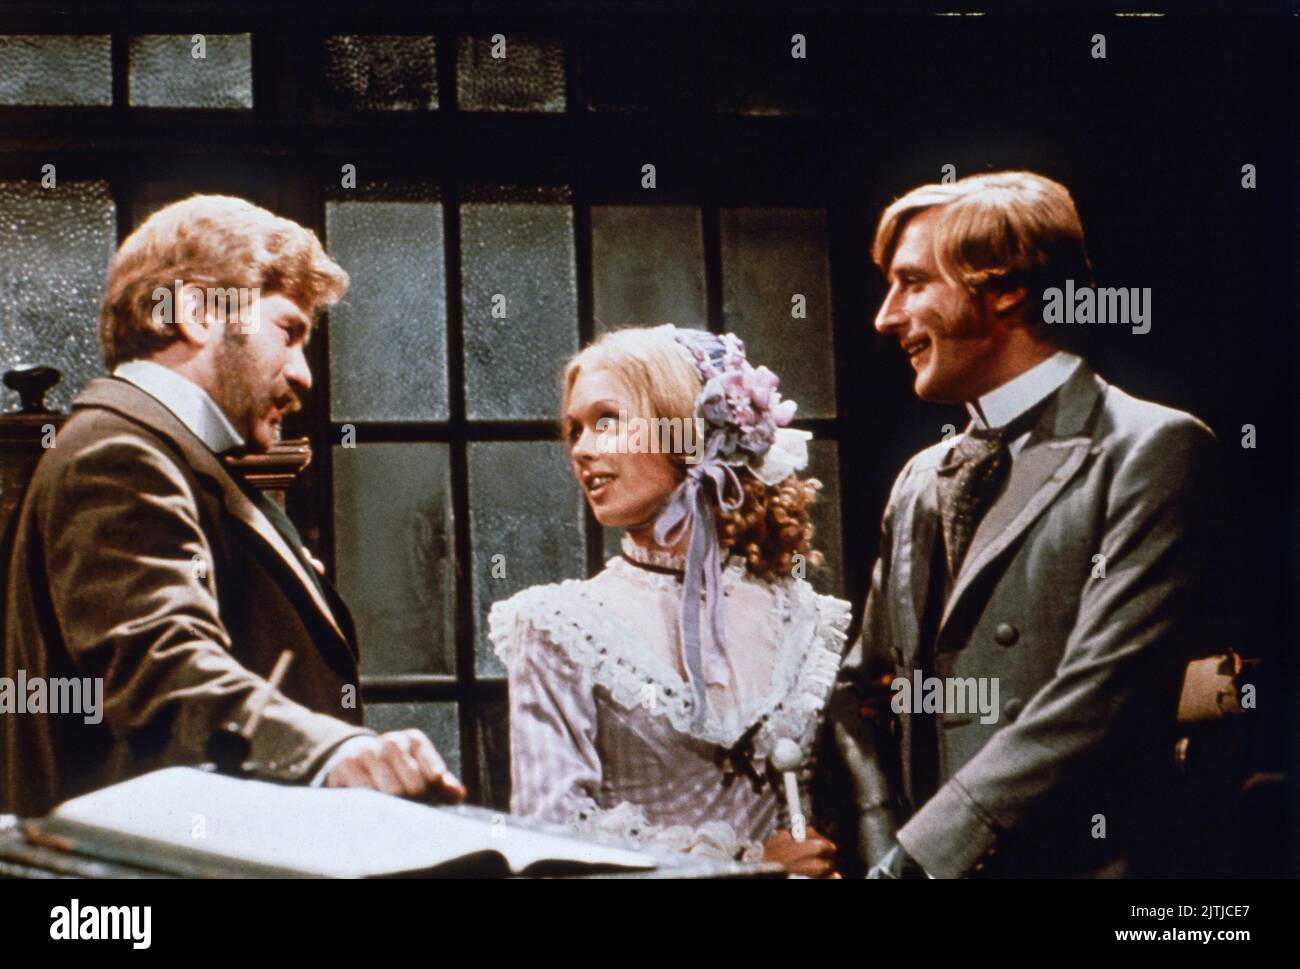 La ligne Onedin, alias : mourir, Onedin-Linie Fernsehserie, Großbritannien 1971 - 1980, acteurs : Brian Rawlinson, Jessica Benton, Philip Bond Banque D'Images